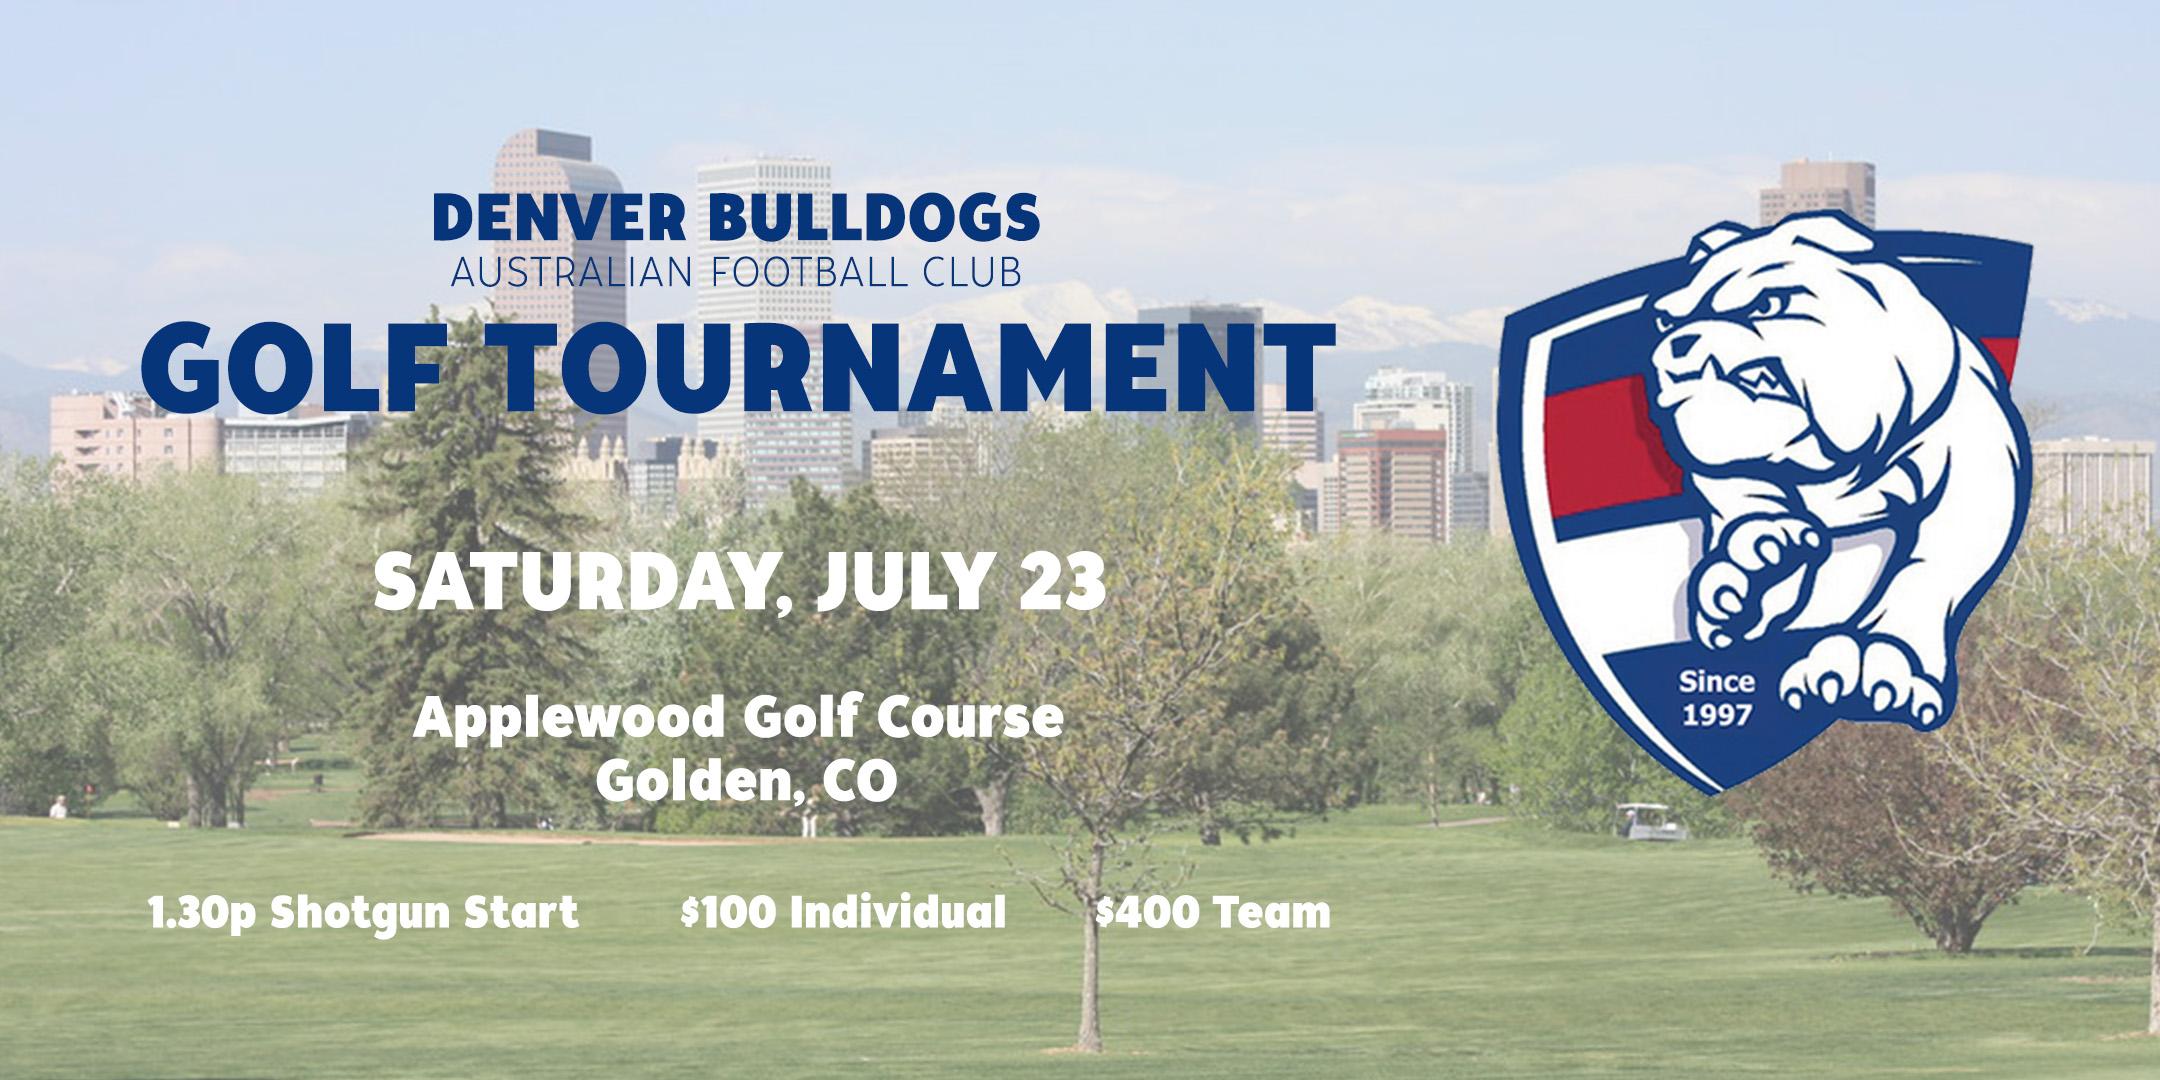 Denver Bulldogs Annual Charity Golf Tournament